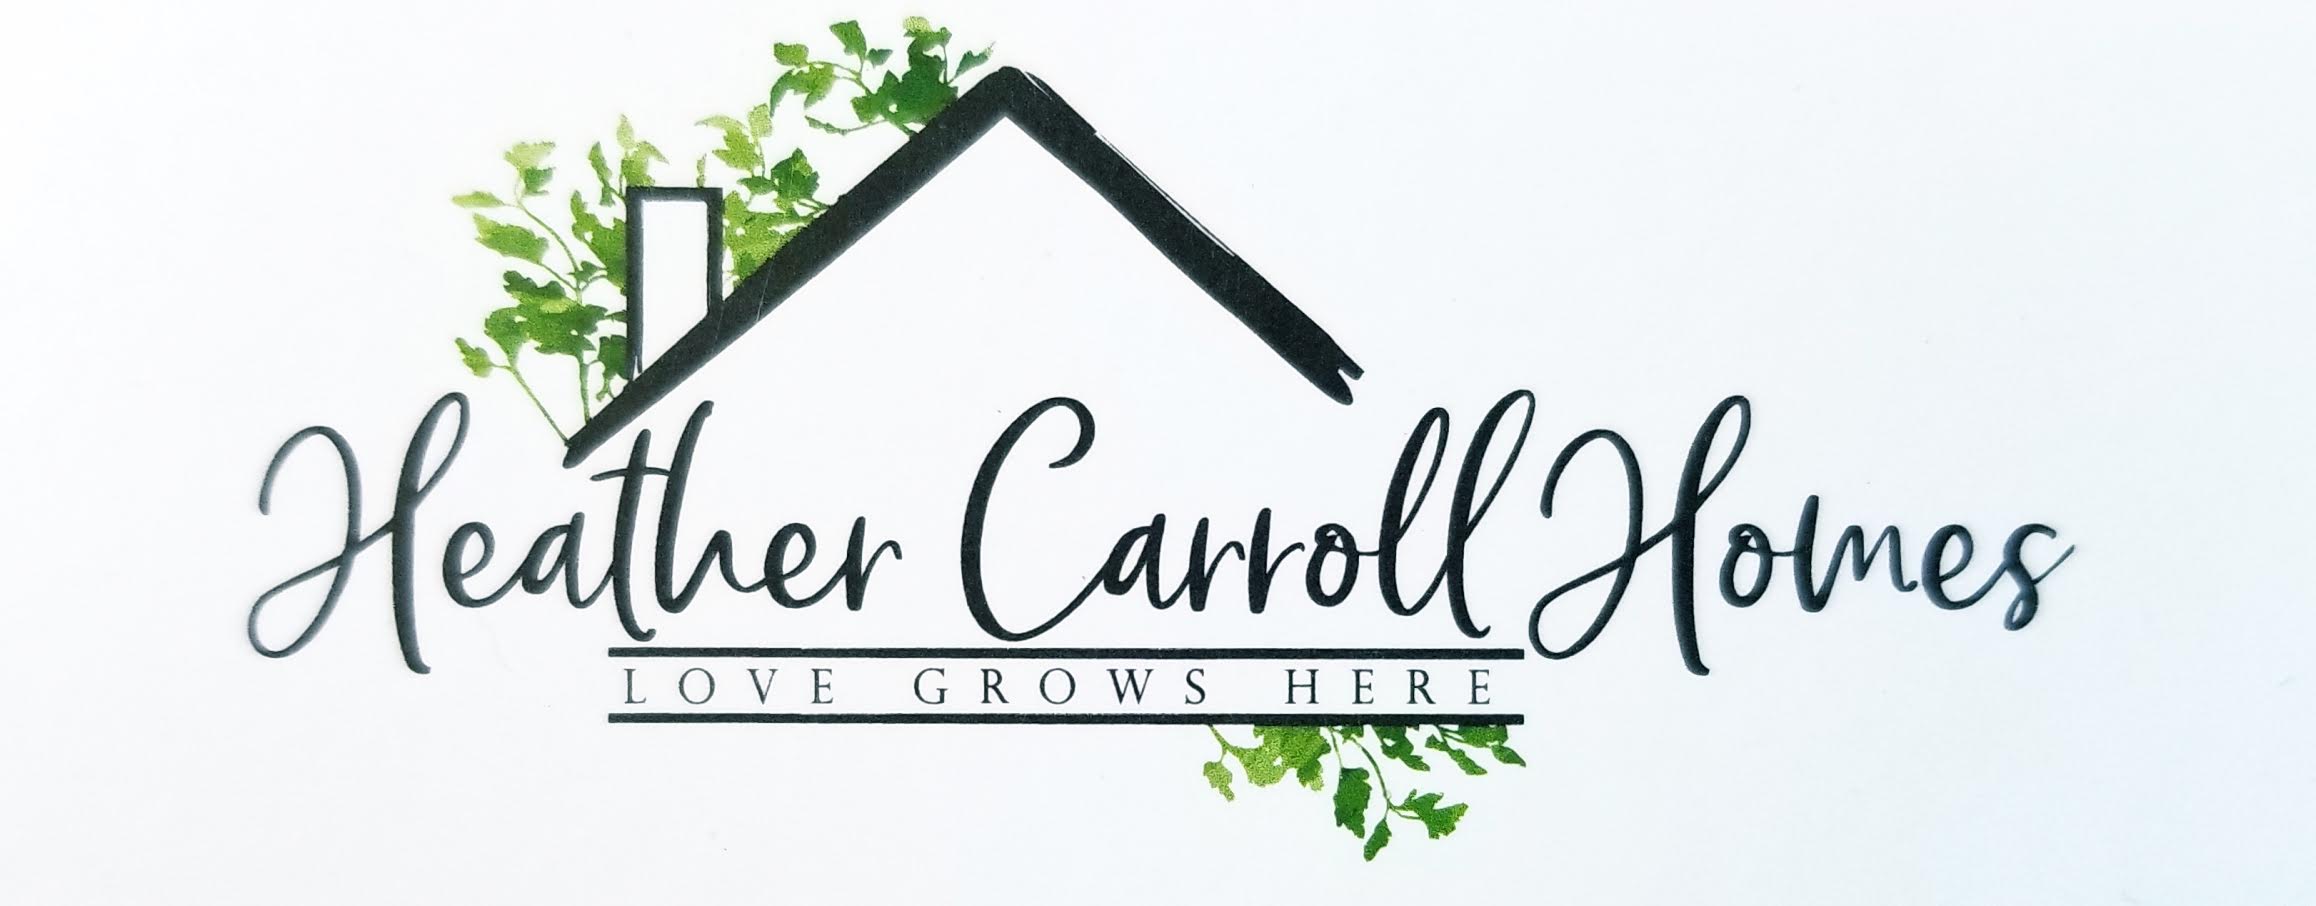 Heather Carroll Homes,  J & R Properties,  Holte Properties